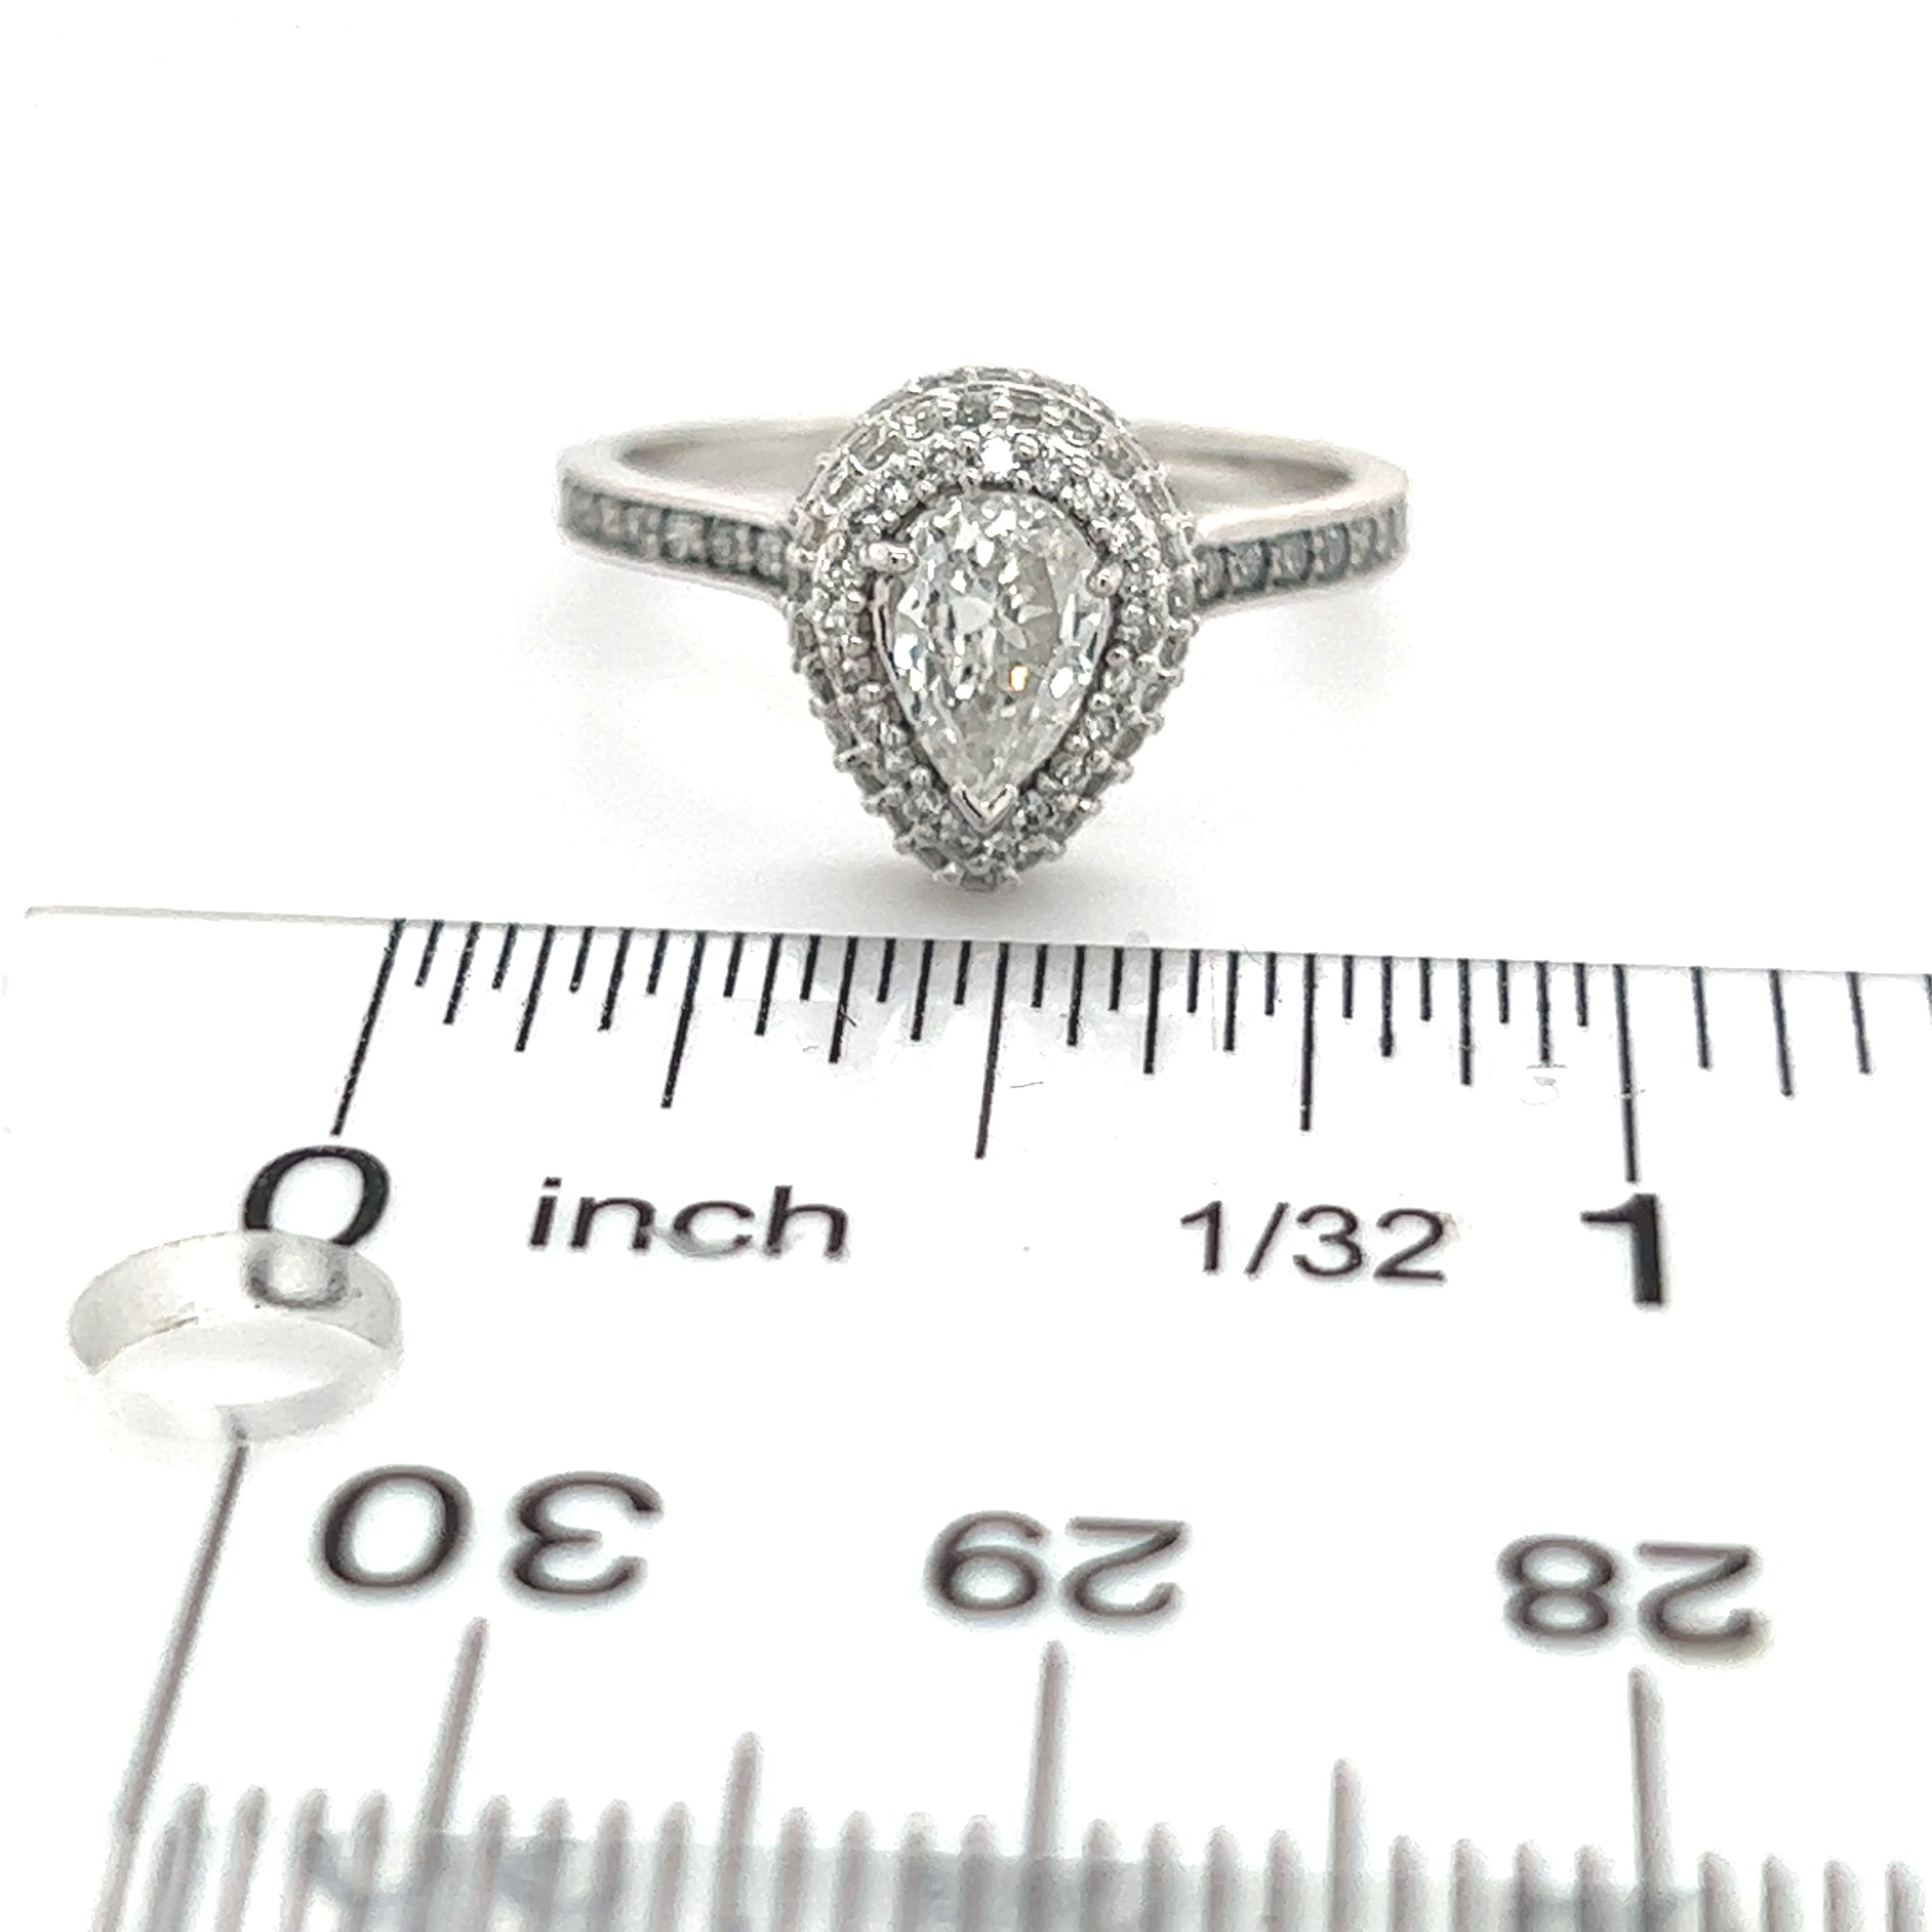 Diamond Ring Size 6.5 14k Gold 0.91 TCW 3.19 Grams Certified $5,950 215101